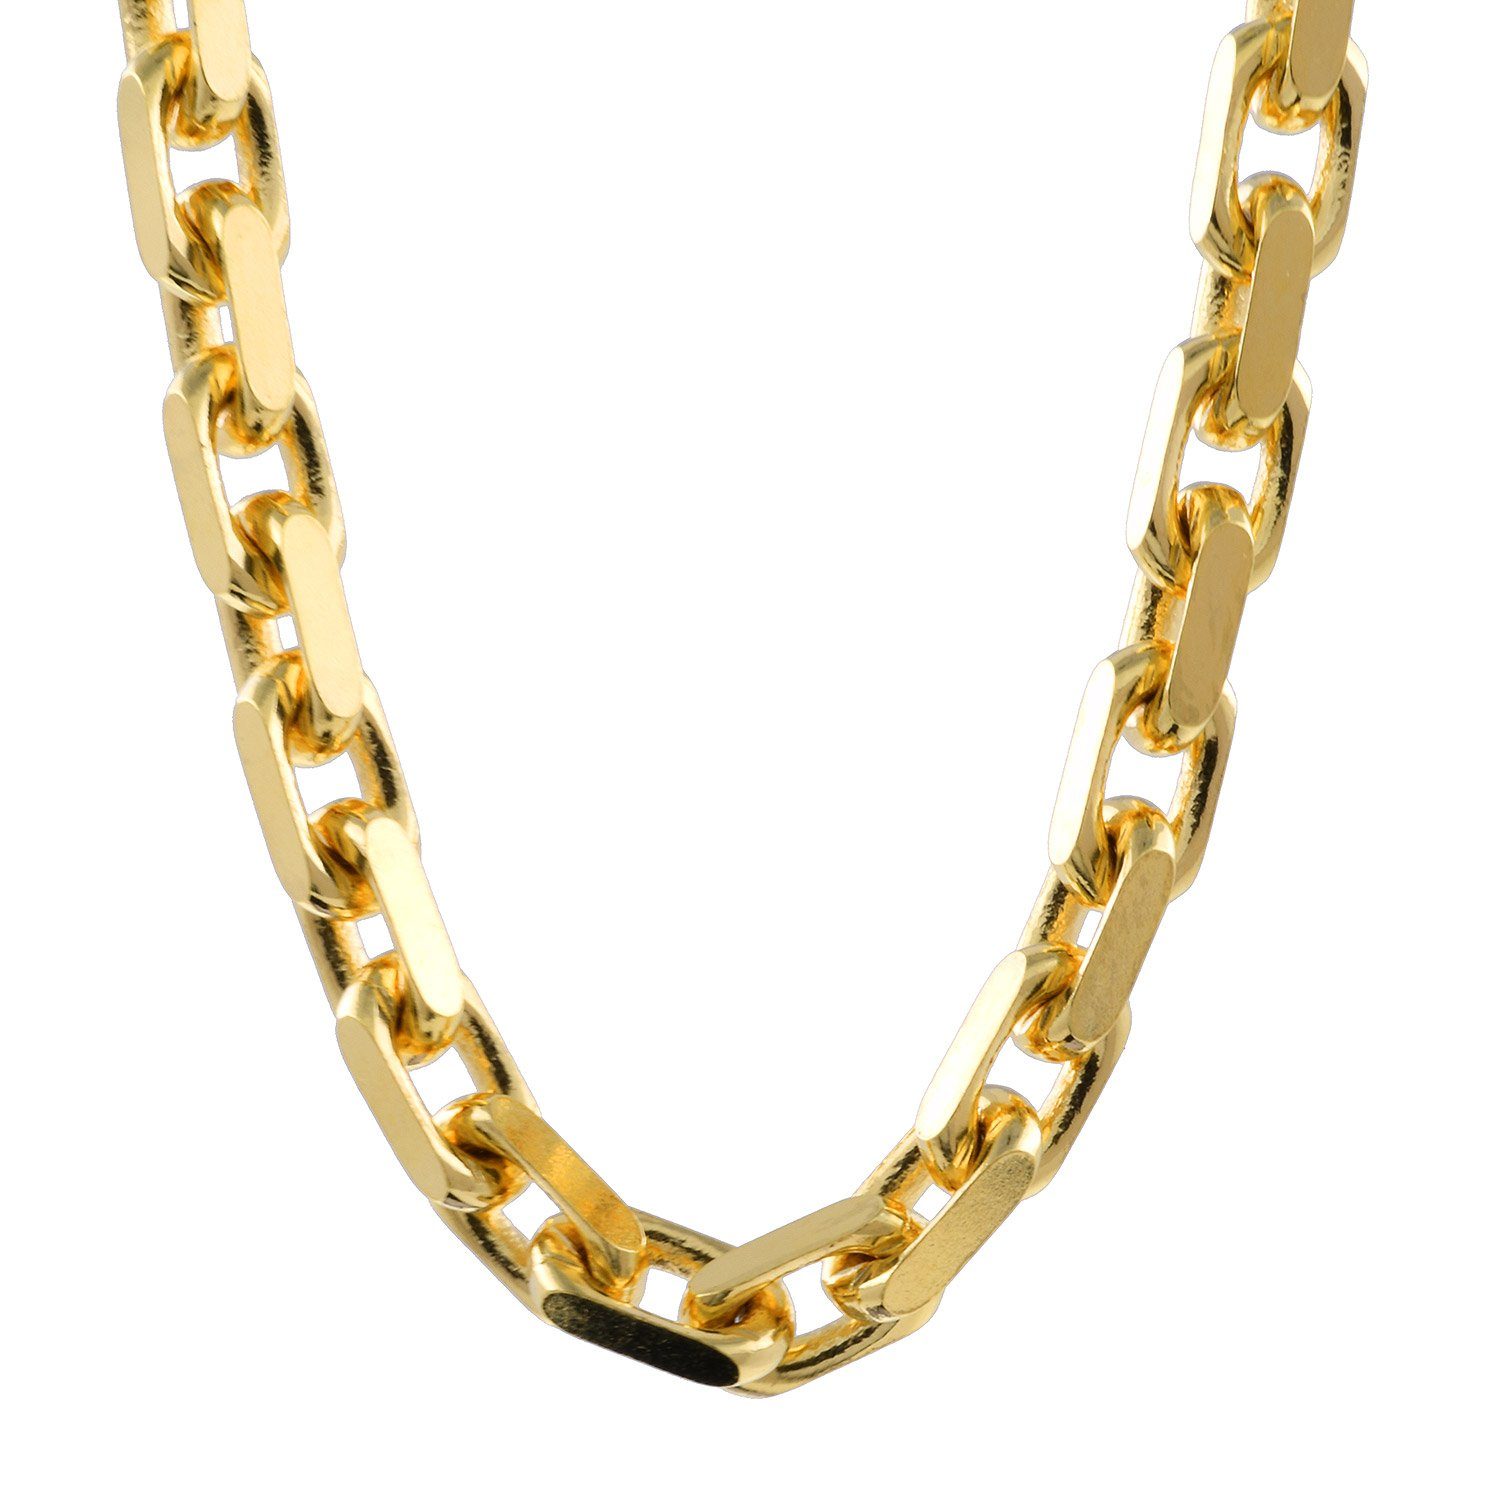 HOPLO Goldkette Ankerkette diamantiert 750 - 18 Karat Gold 4,0 mm  Kettenlänge 55 cm, Made in Germany